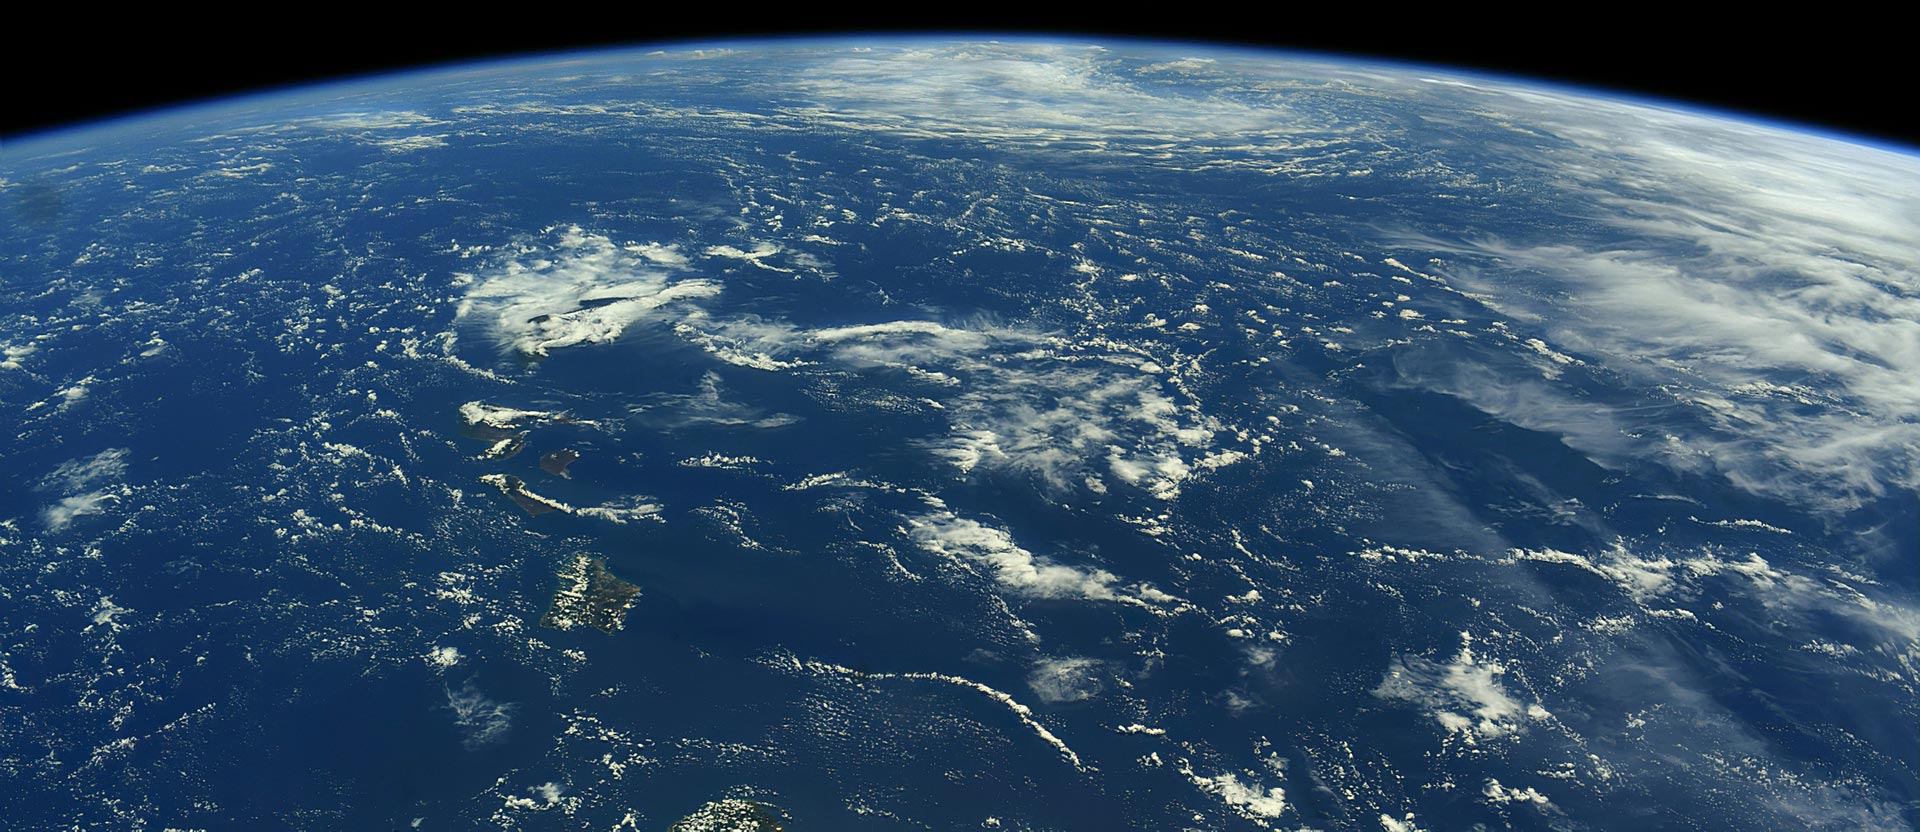 Un arrondi de la Terre avec vue sur Hawaï depuis l'ISS